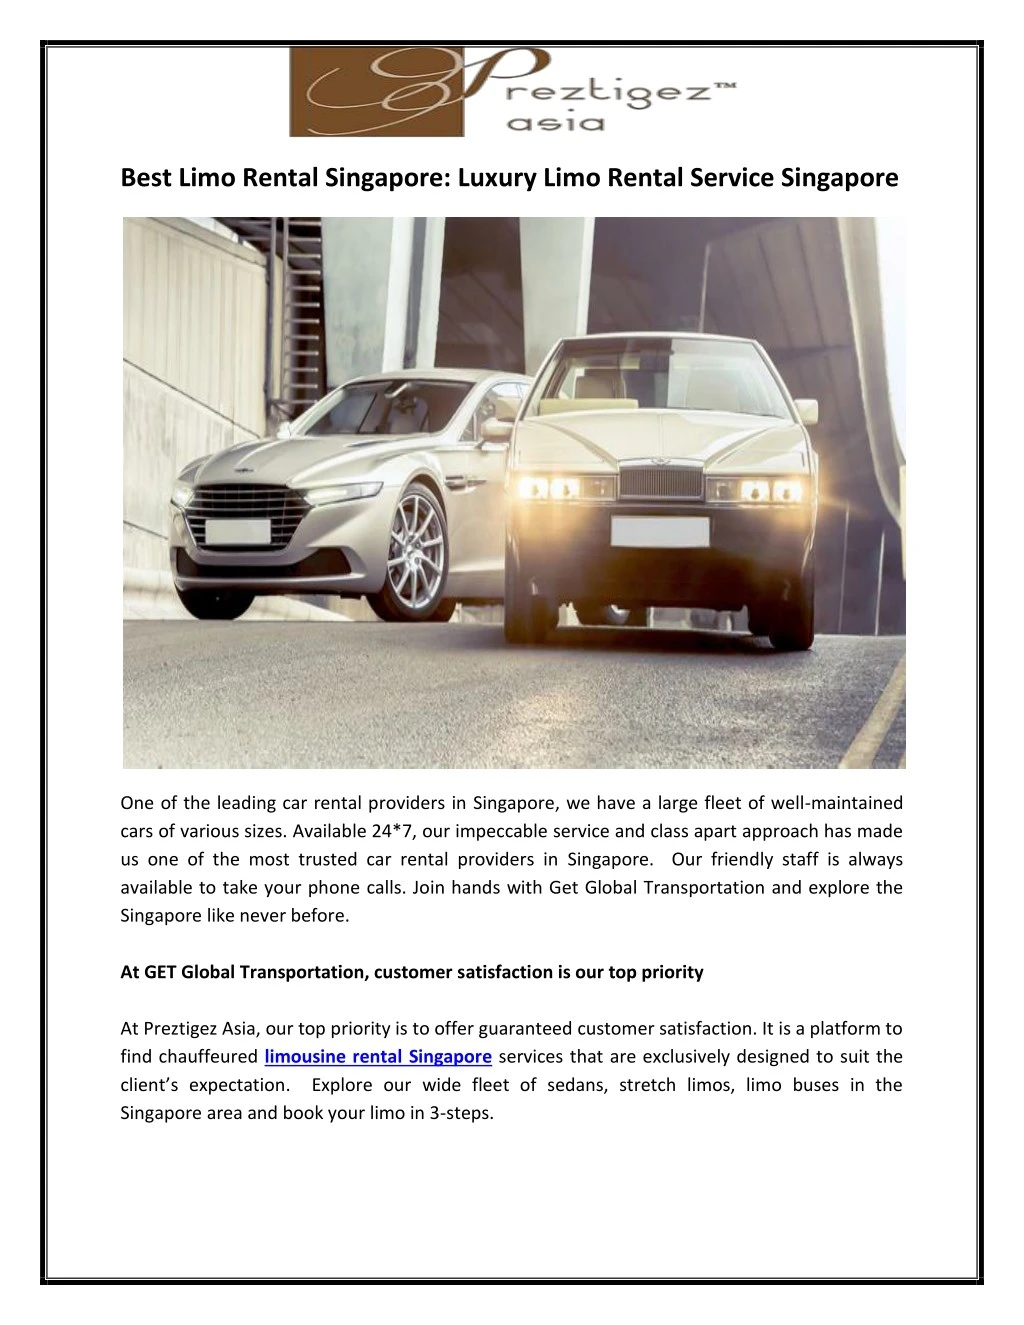 best limo rental singapore luxury limo rental